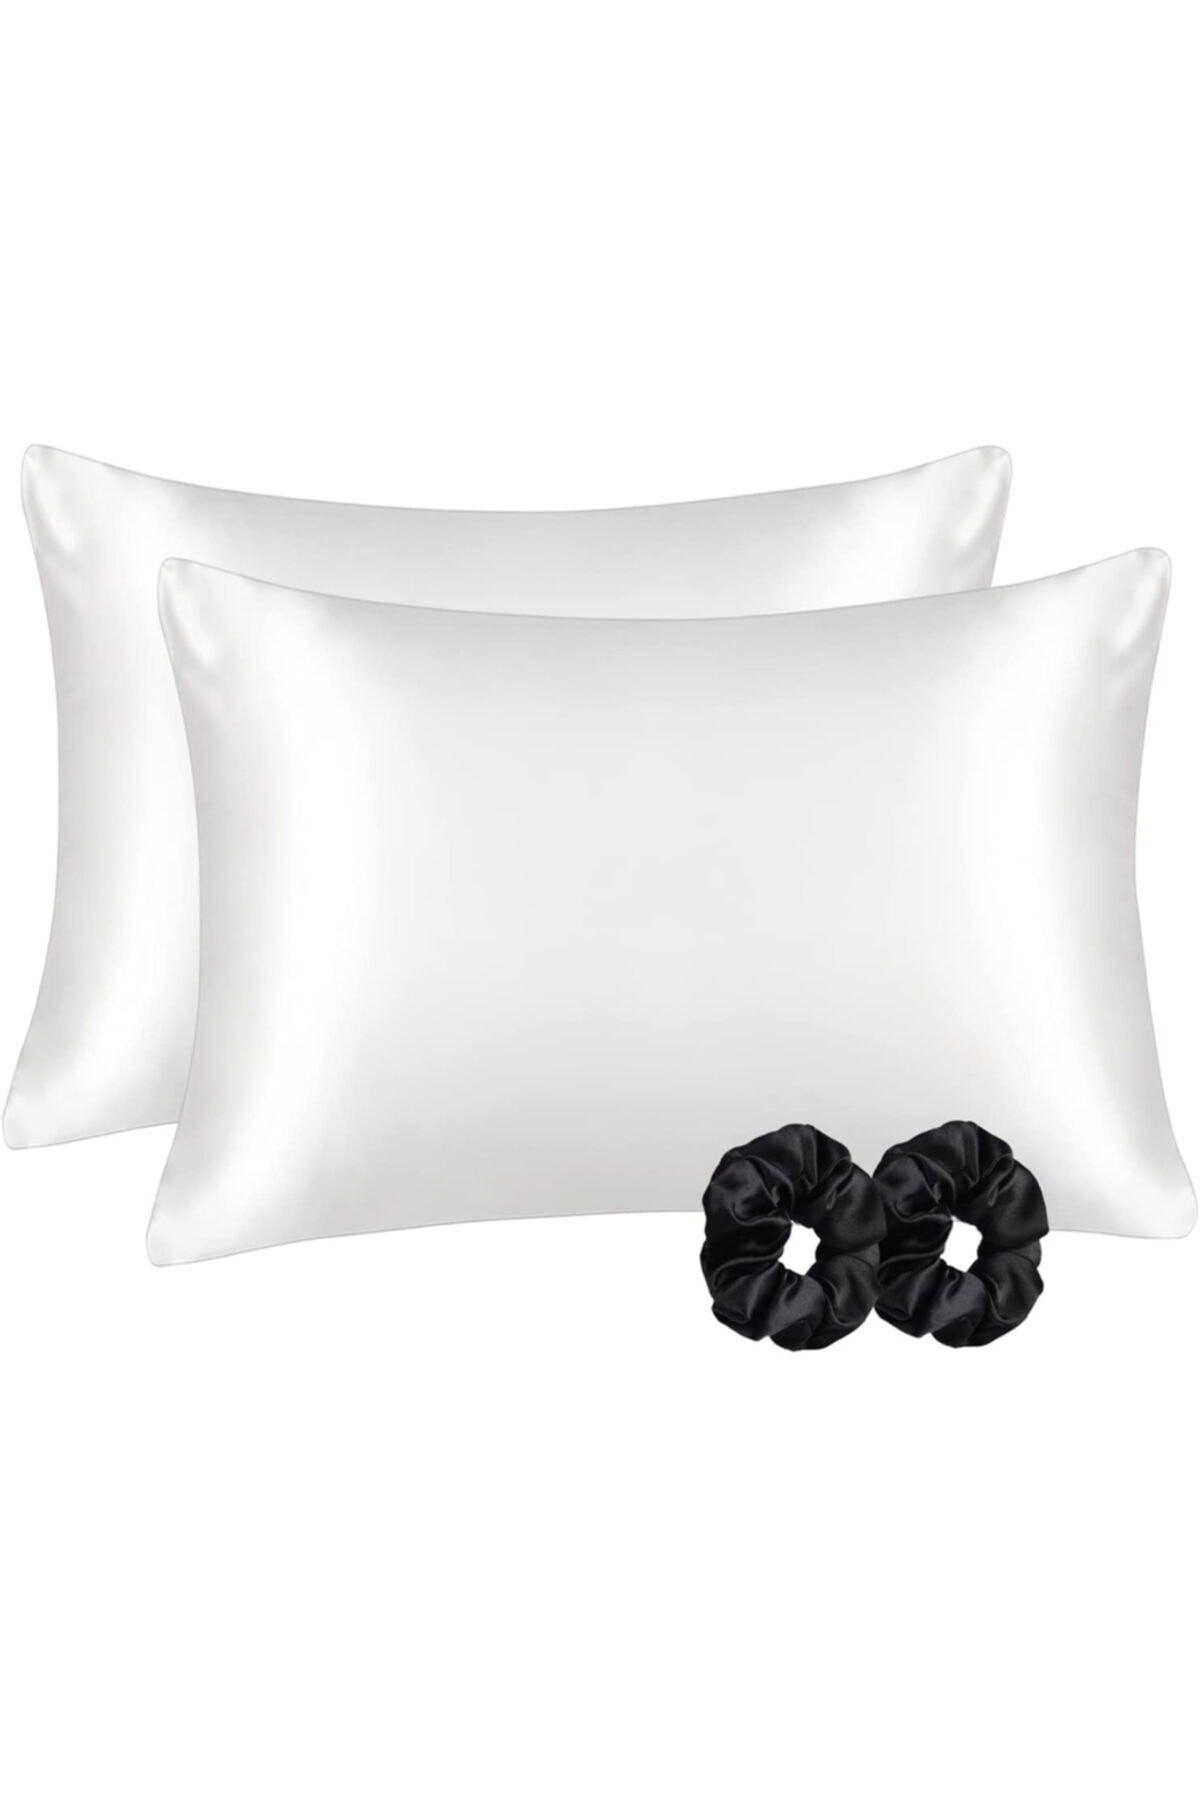 100% Silk Satin 50x70 Cm 2 Pillow Cases & 2 Buckles - Swordslife